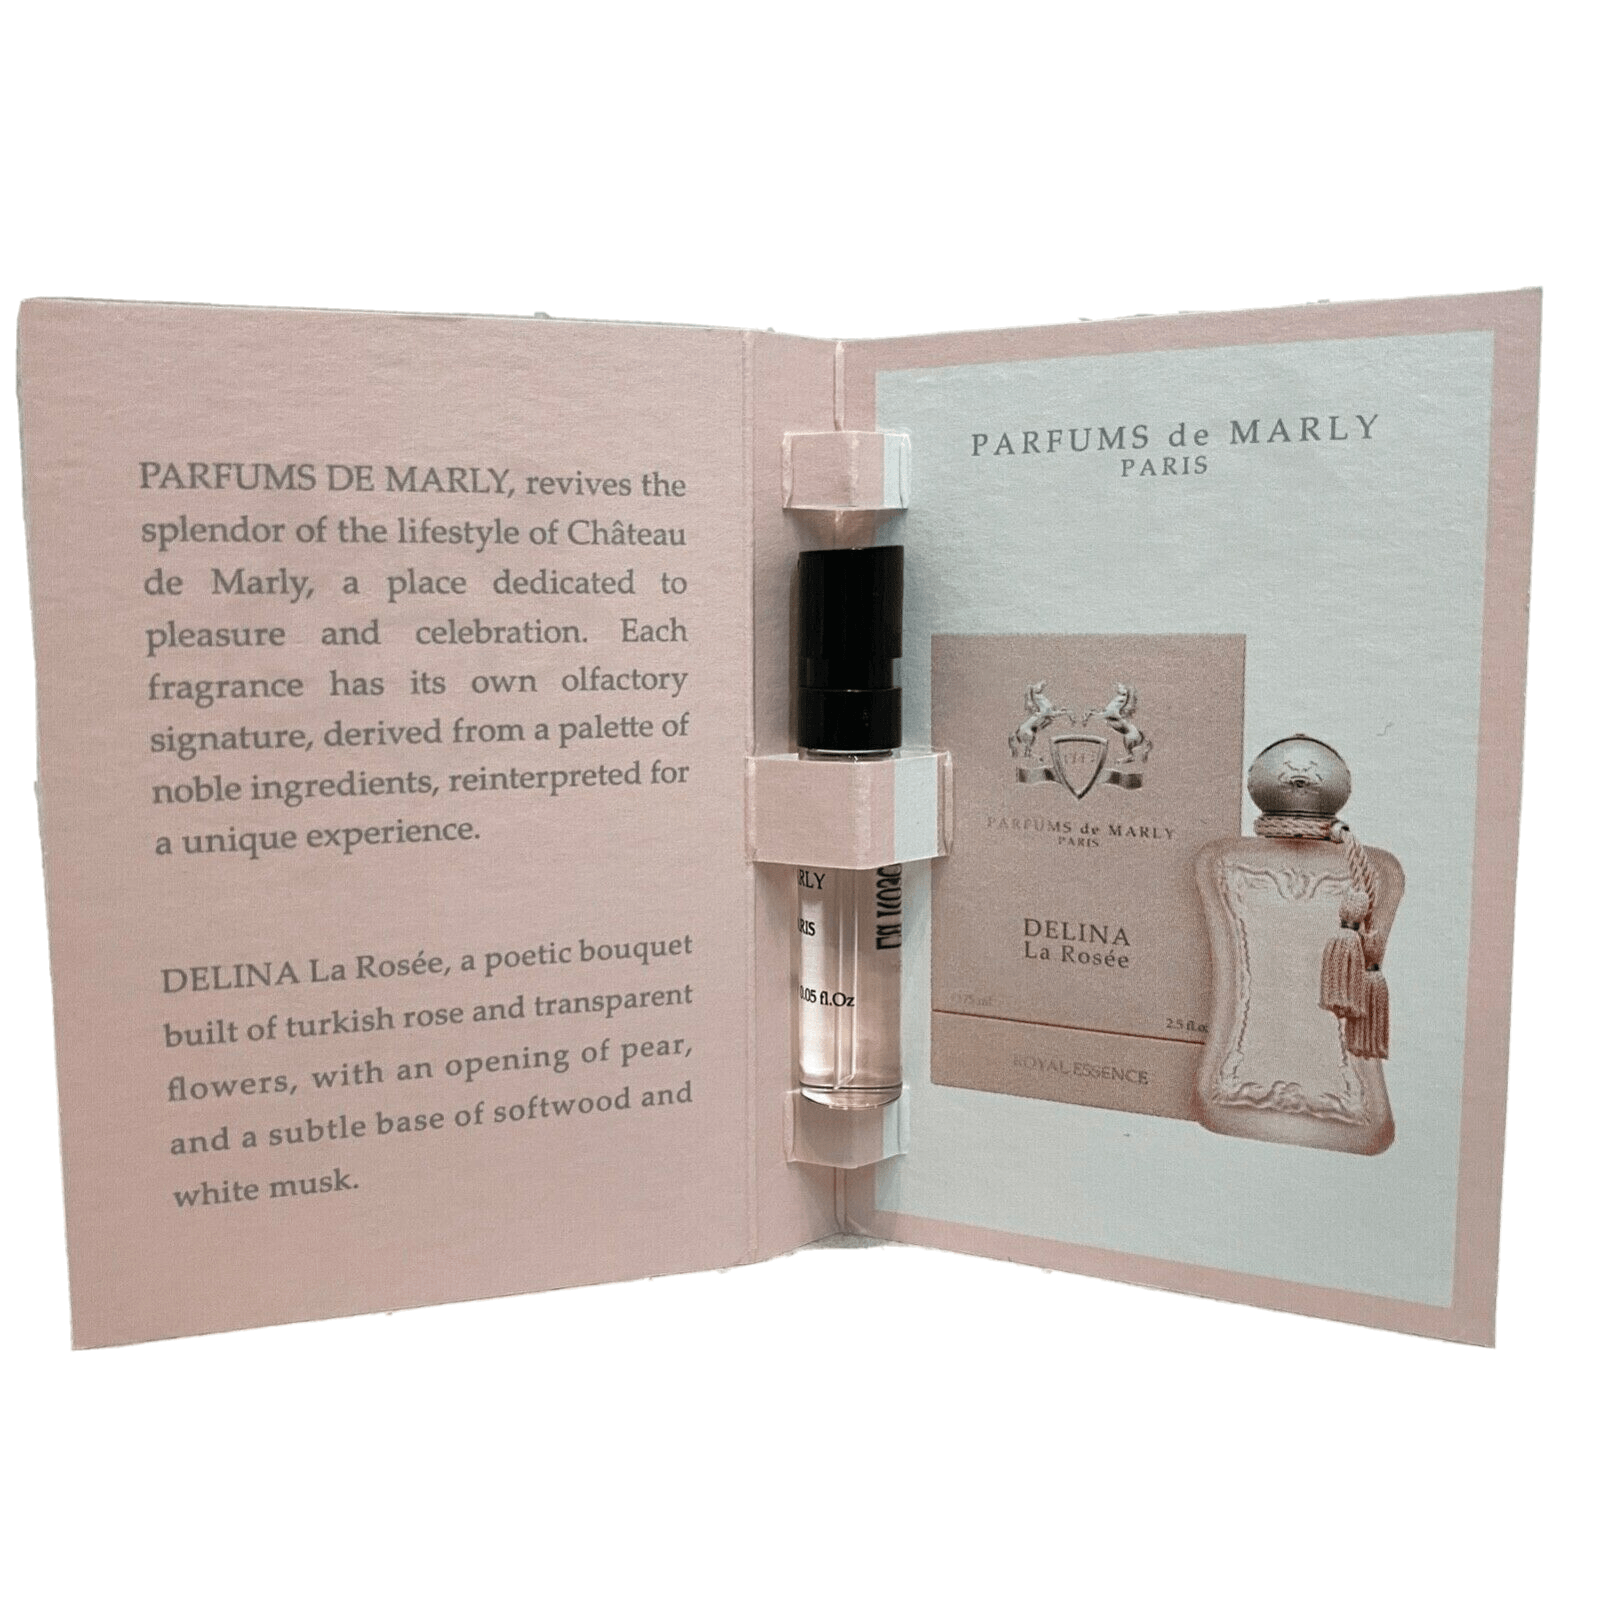 Parfums De Marly Delina La Rosee official perfume sample 1.5ml 0.05 fl. o.z.